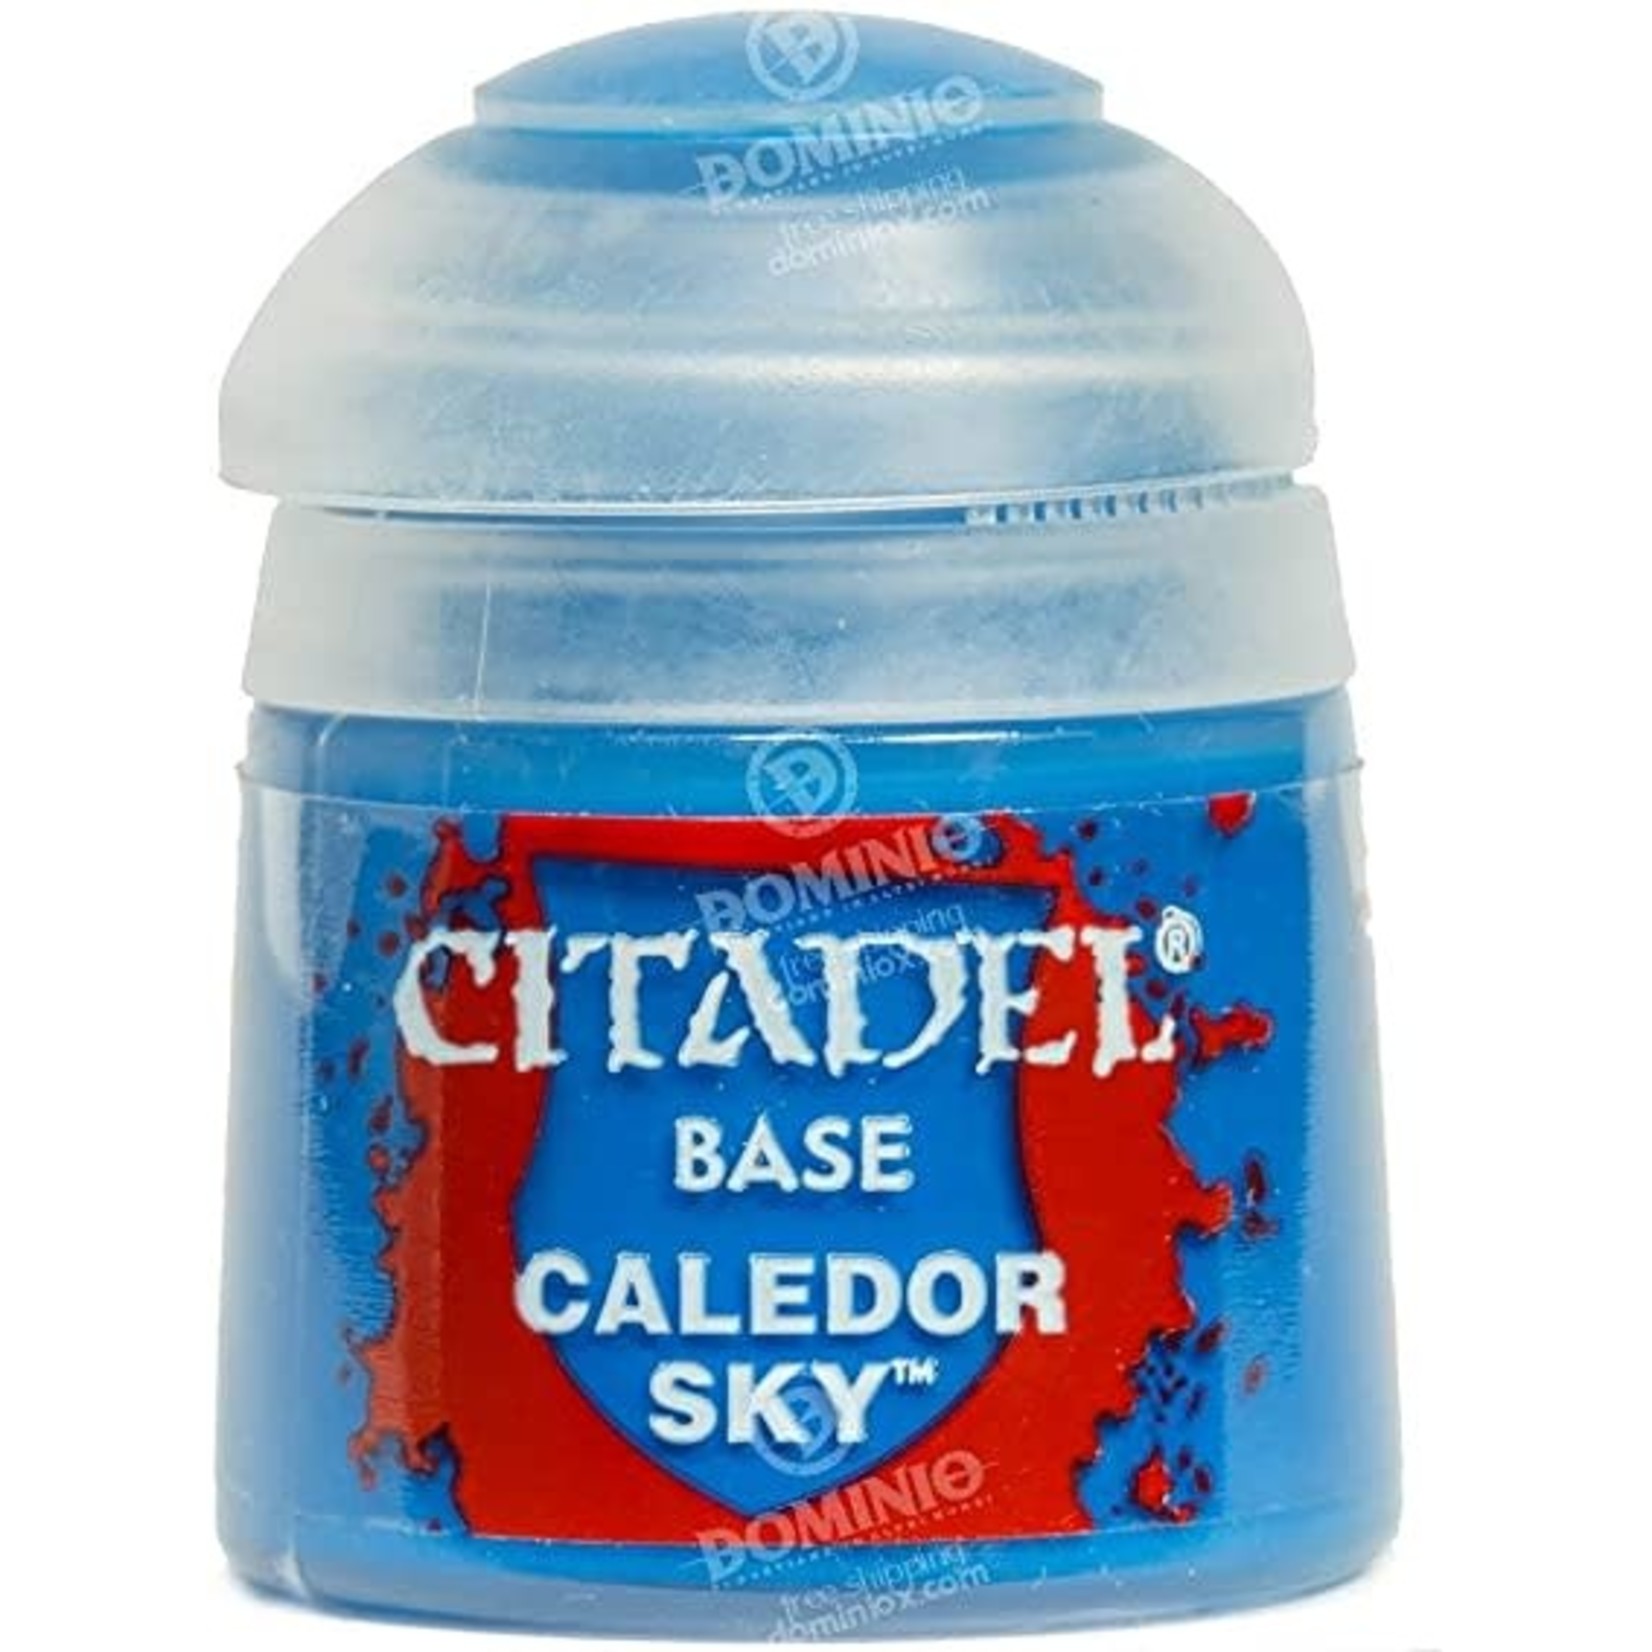 Paint: Citadel - Shade Citadel Colour: Shade Paint Set - Tower of Games